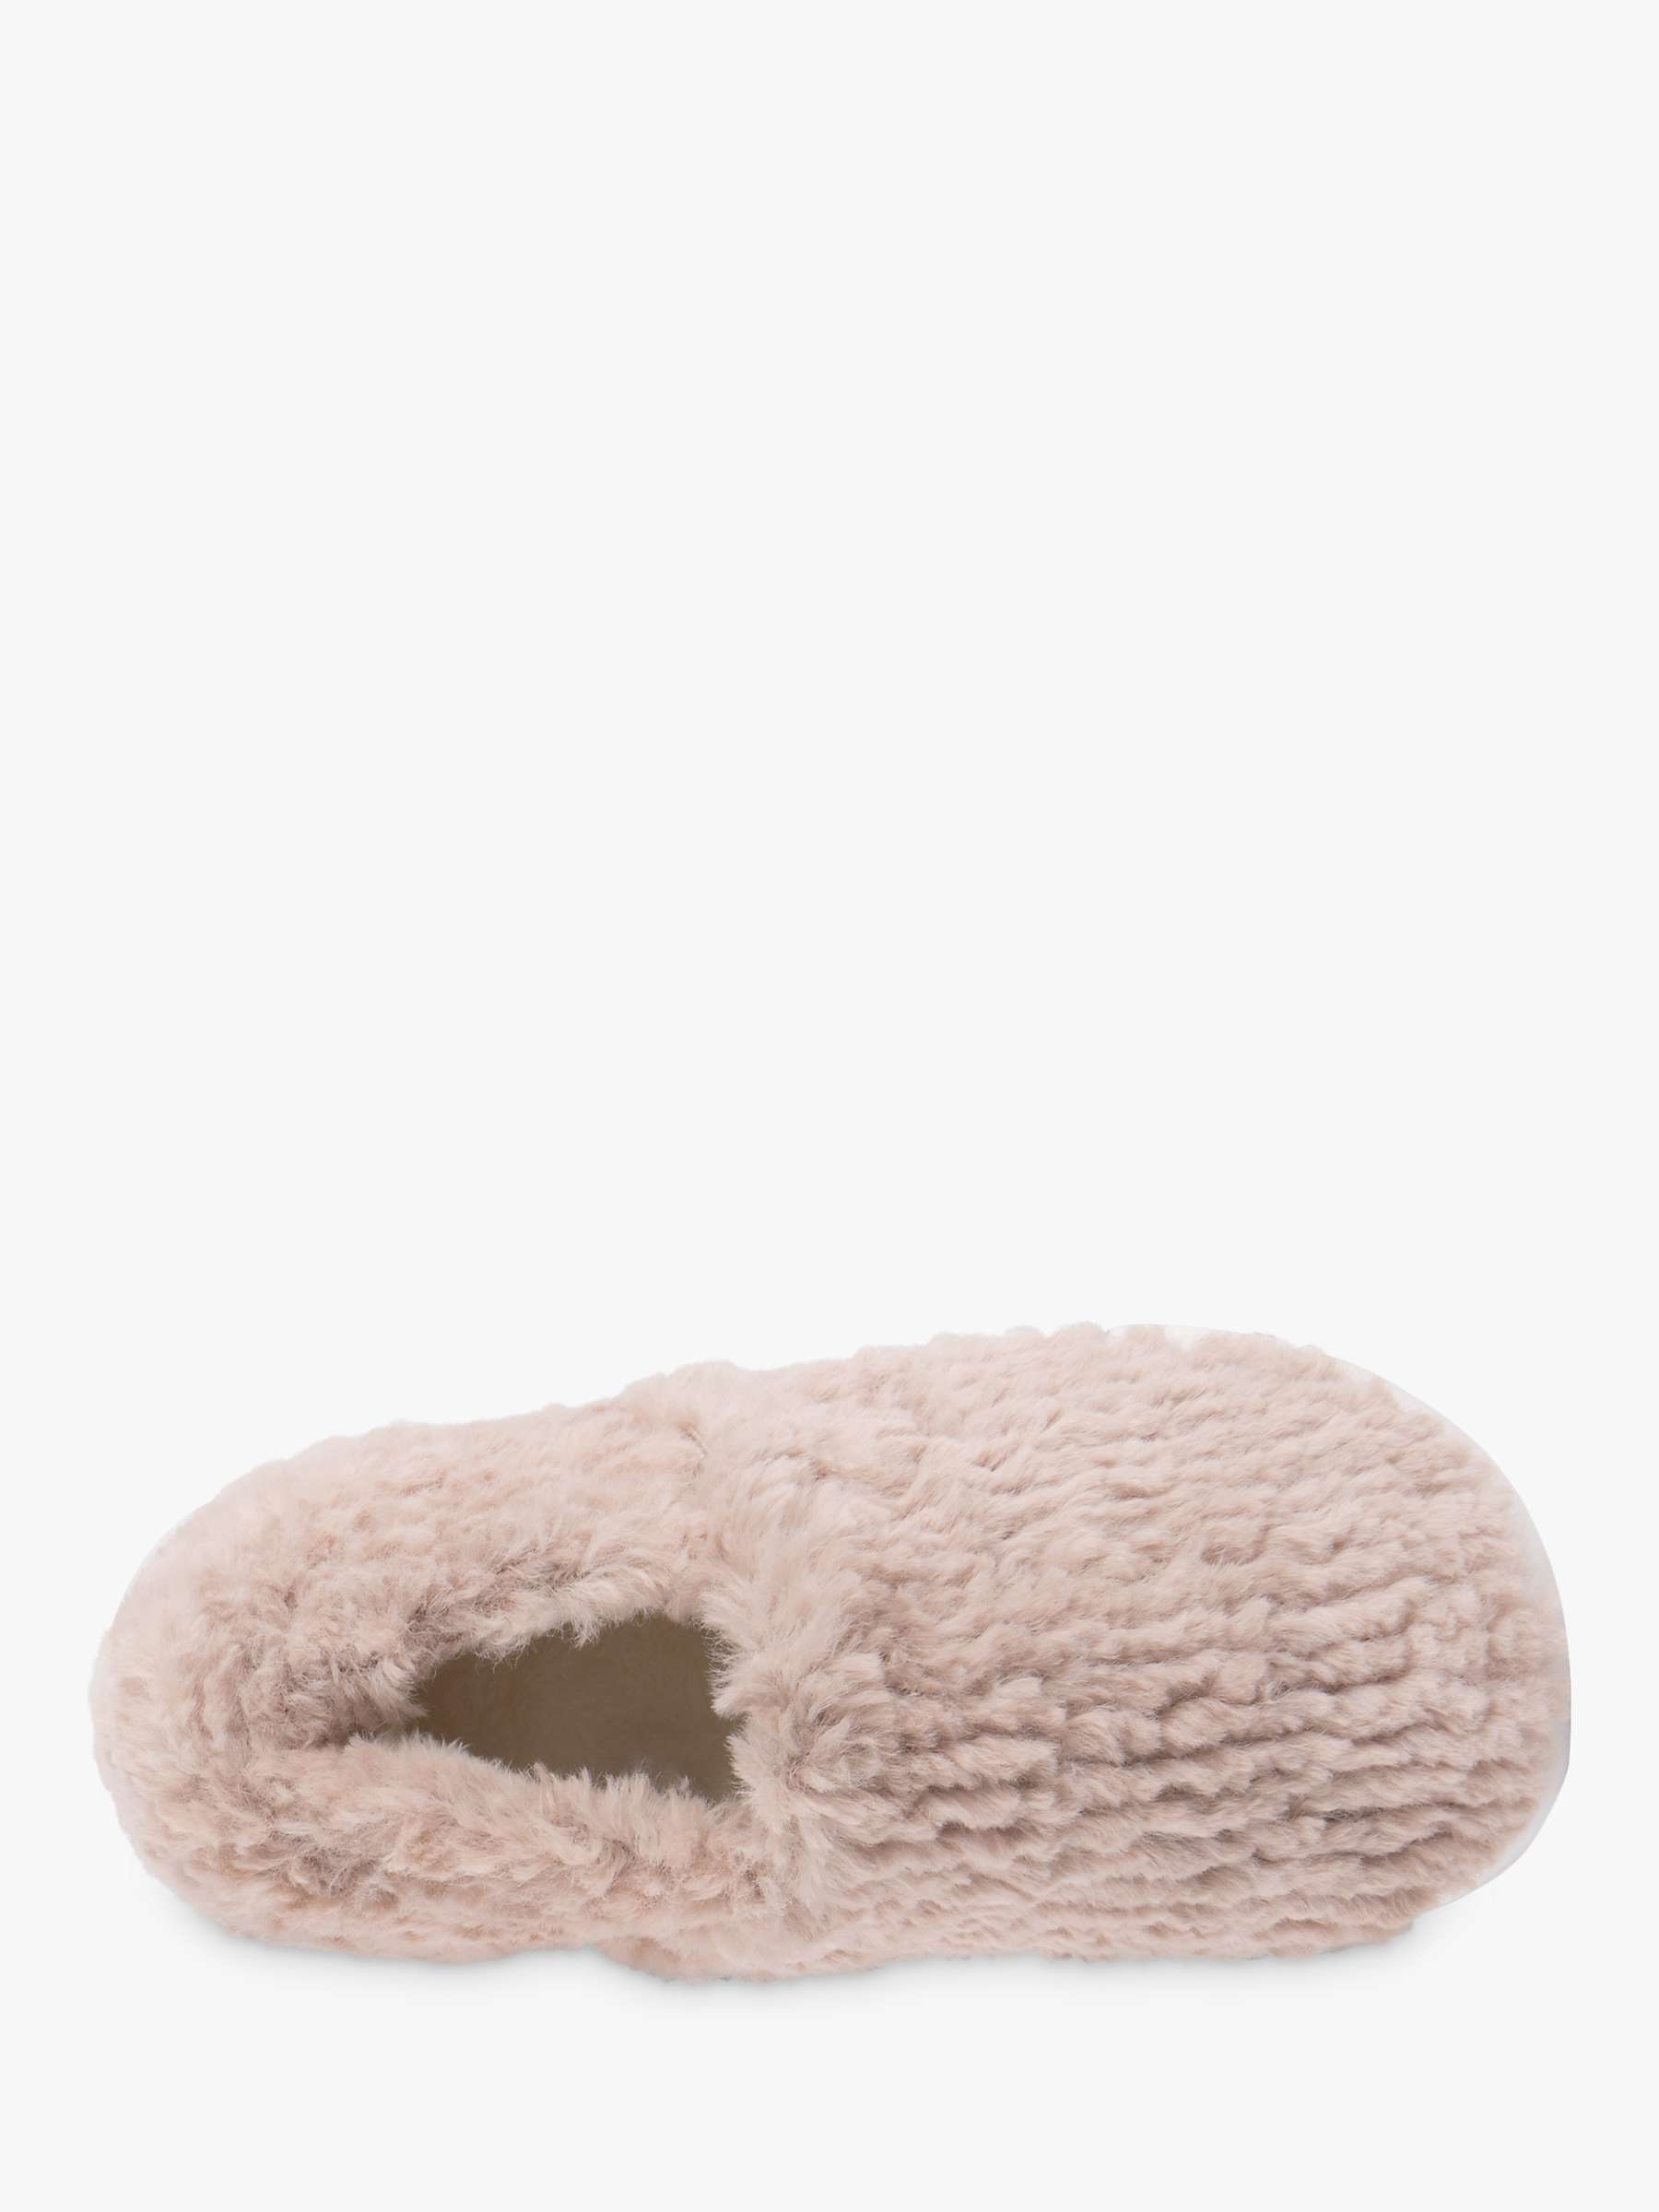 Buy totes Eva Cloud Textured Faux Fur Slippers Online at johnlewis.com